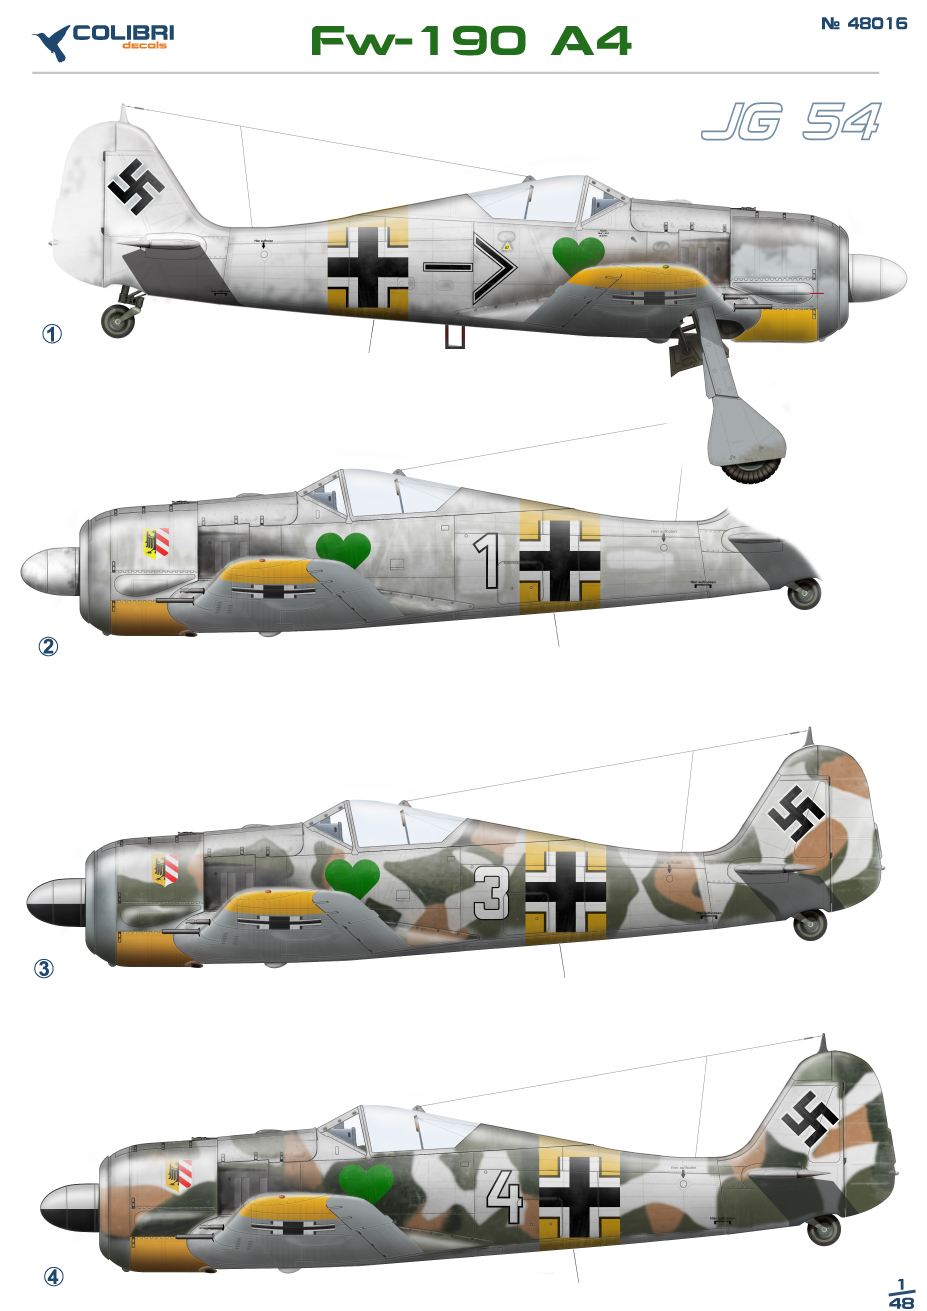 Decal 1/48 Fw-190 A4 Jg 54 (Colibri Decals)